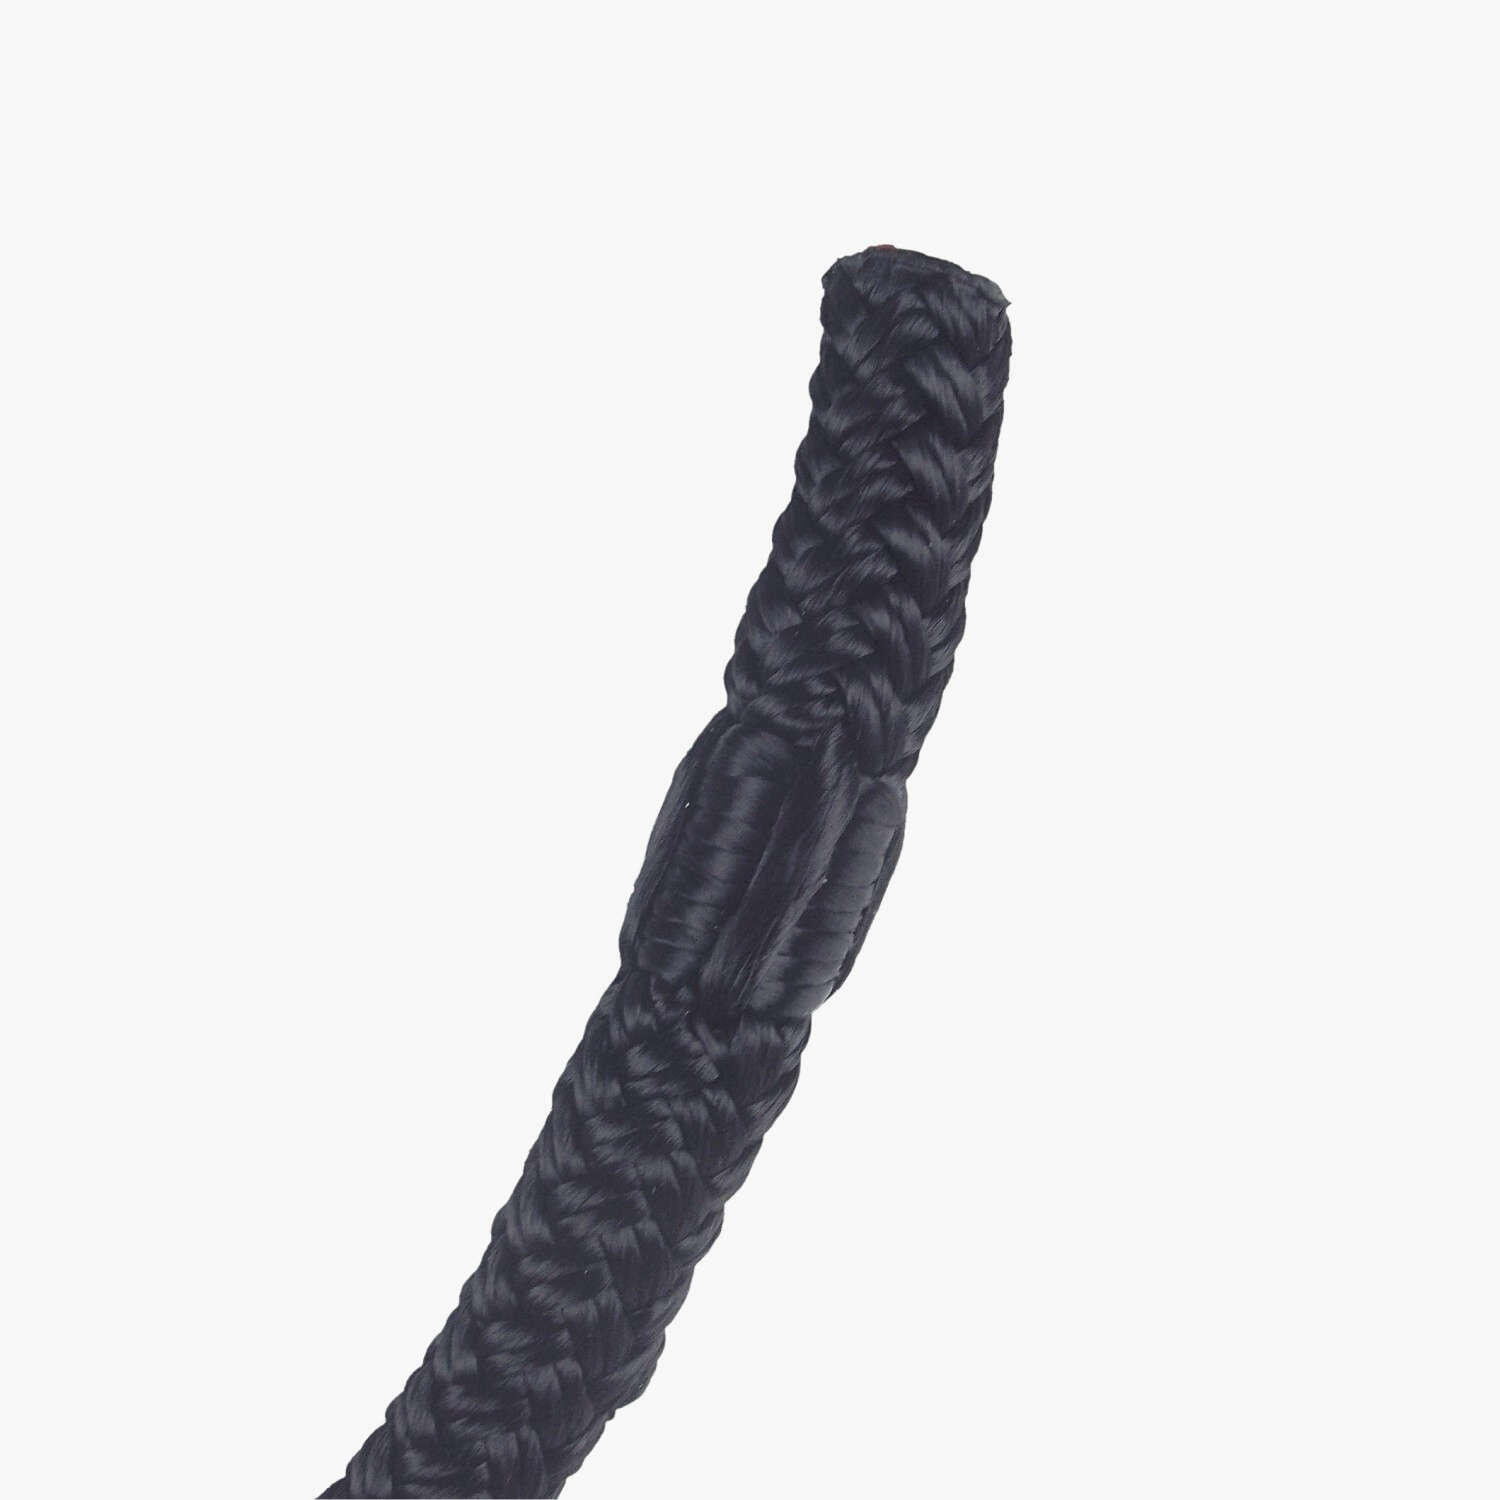 Lomo Dock Line / Mooring Line, 9.5mm x 4.6m Double Braided Nylon Rope - Black 5/5